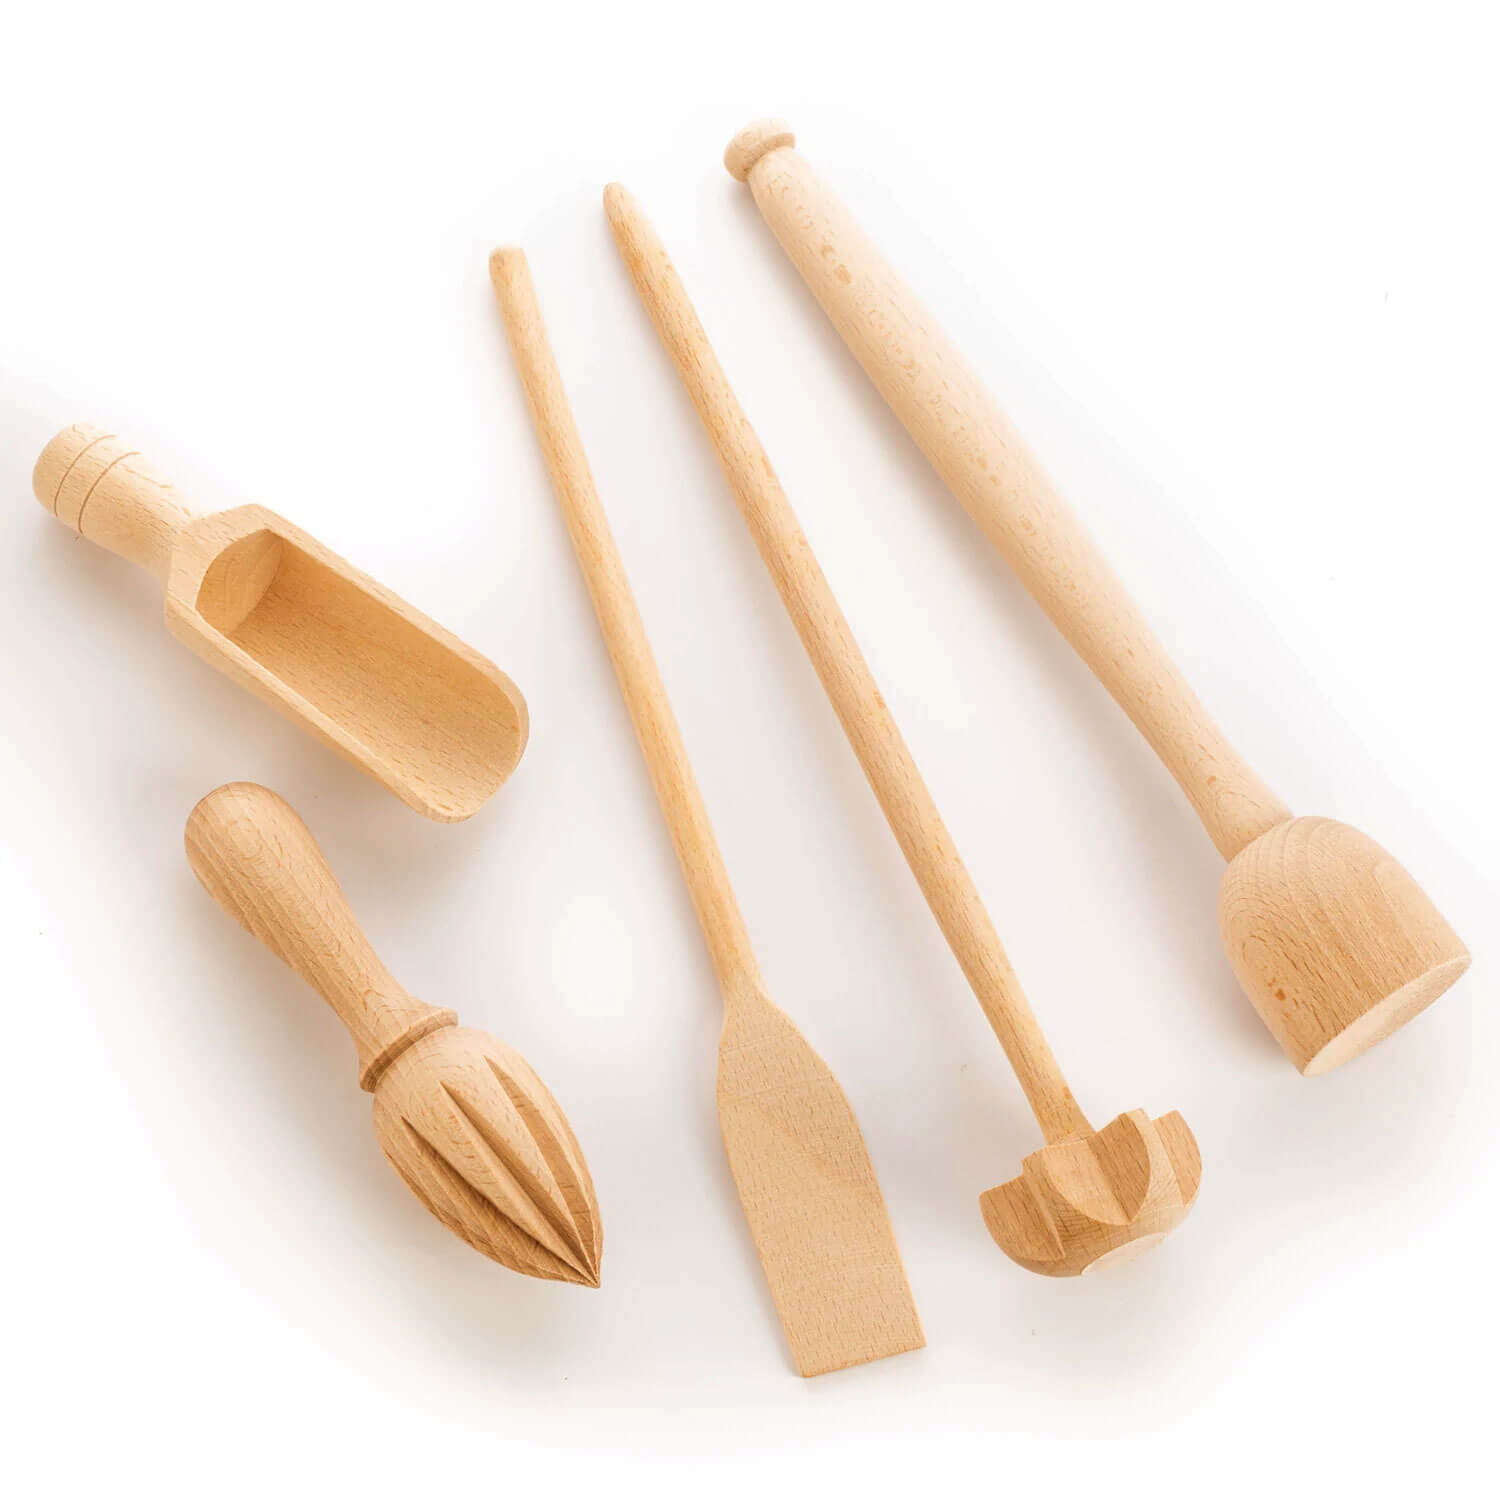 https://cdn.shopify.com/s/files/1/0515/2440/3381/products/5-piece-wooden-kitchen-utensils-set-tuuli-592.jpg